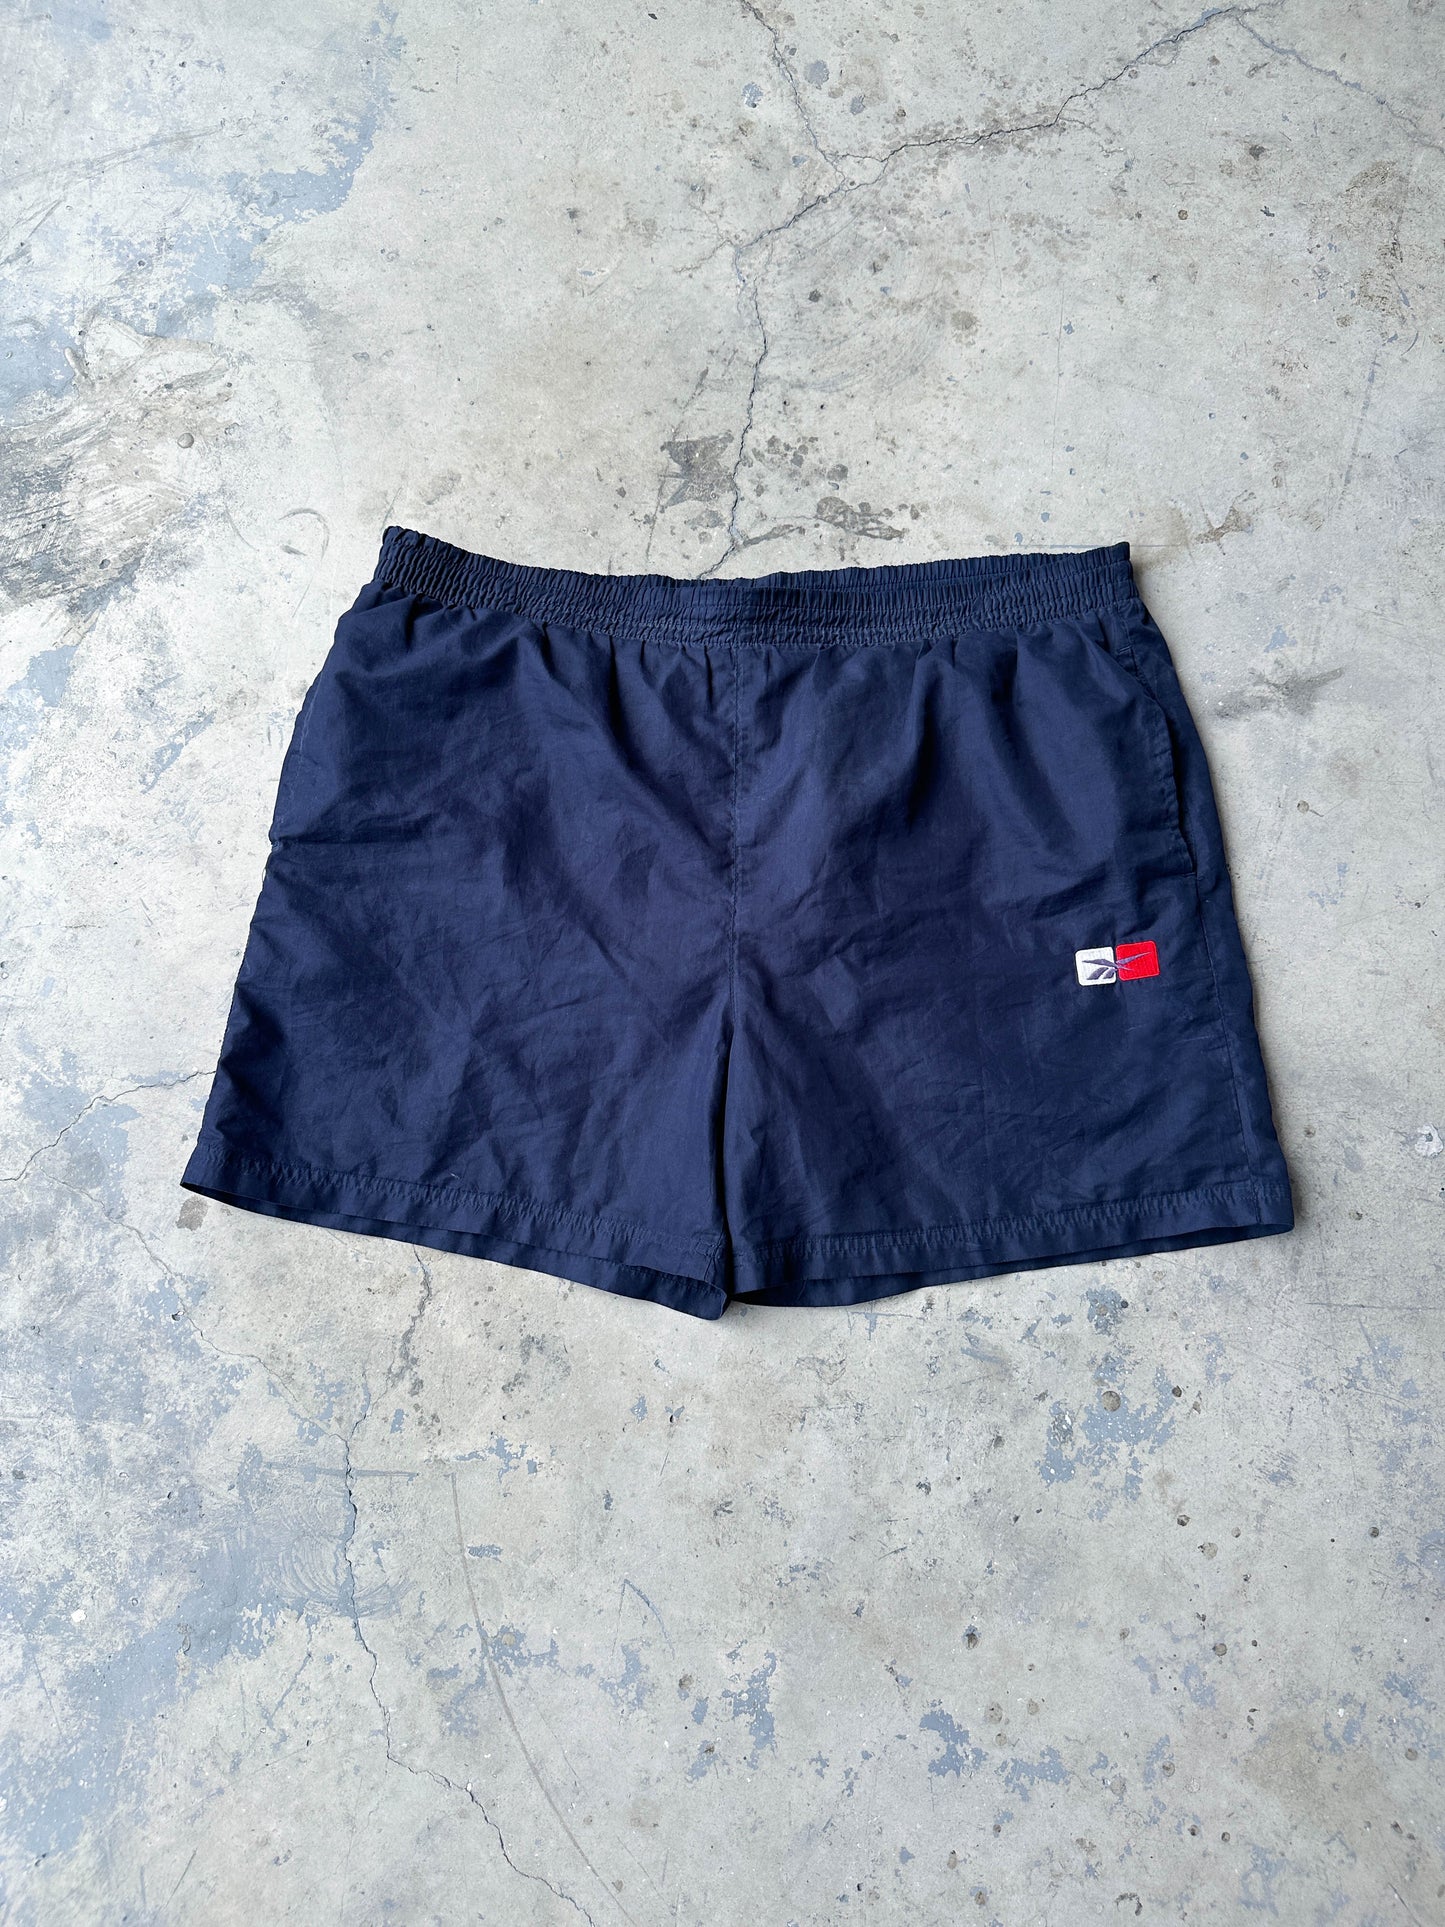 Reebok vintage 00s shorts